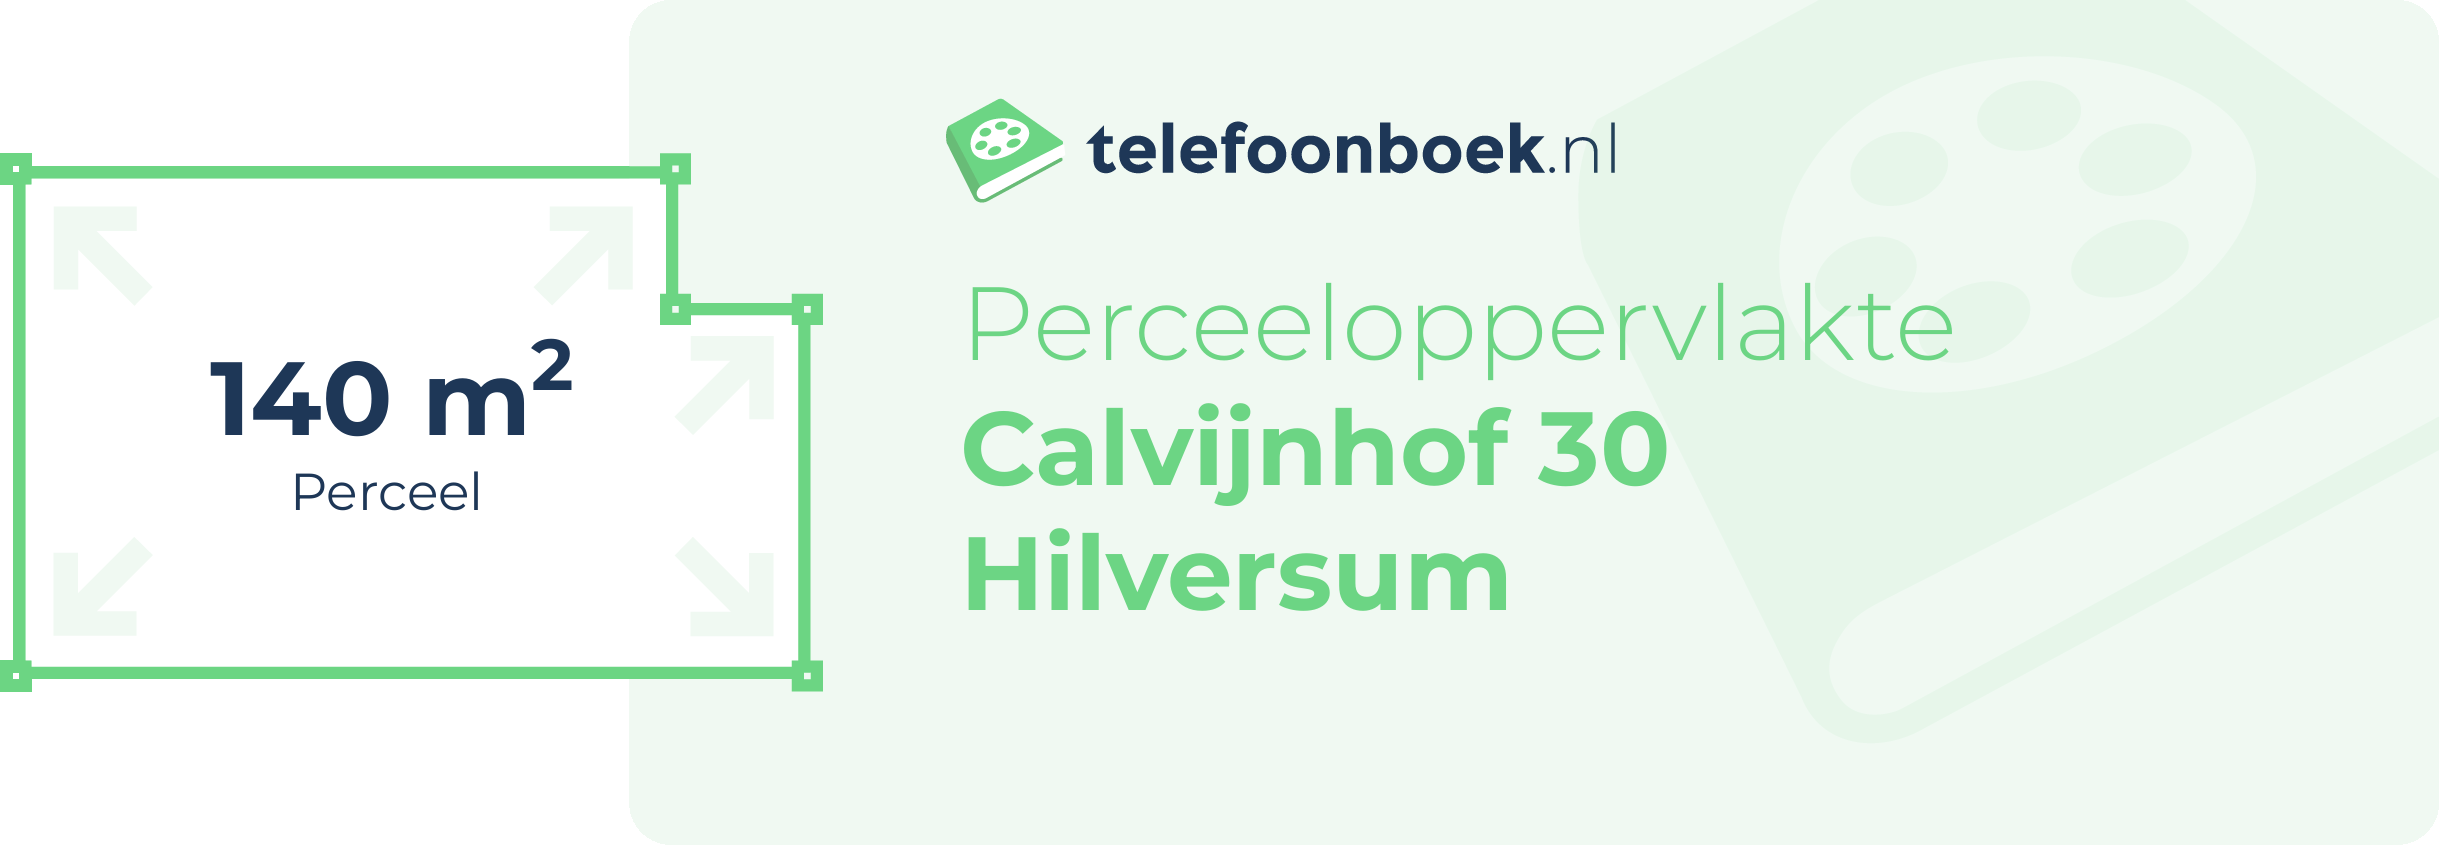 Perceeloppervlakte Calvijnhof 30 Hilversum